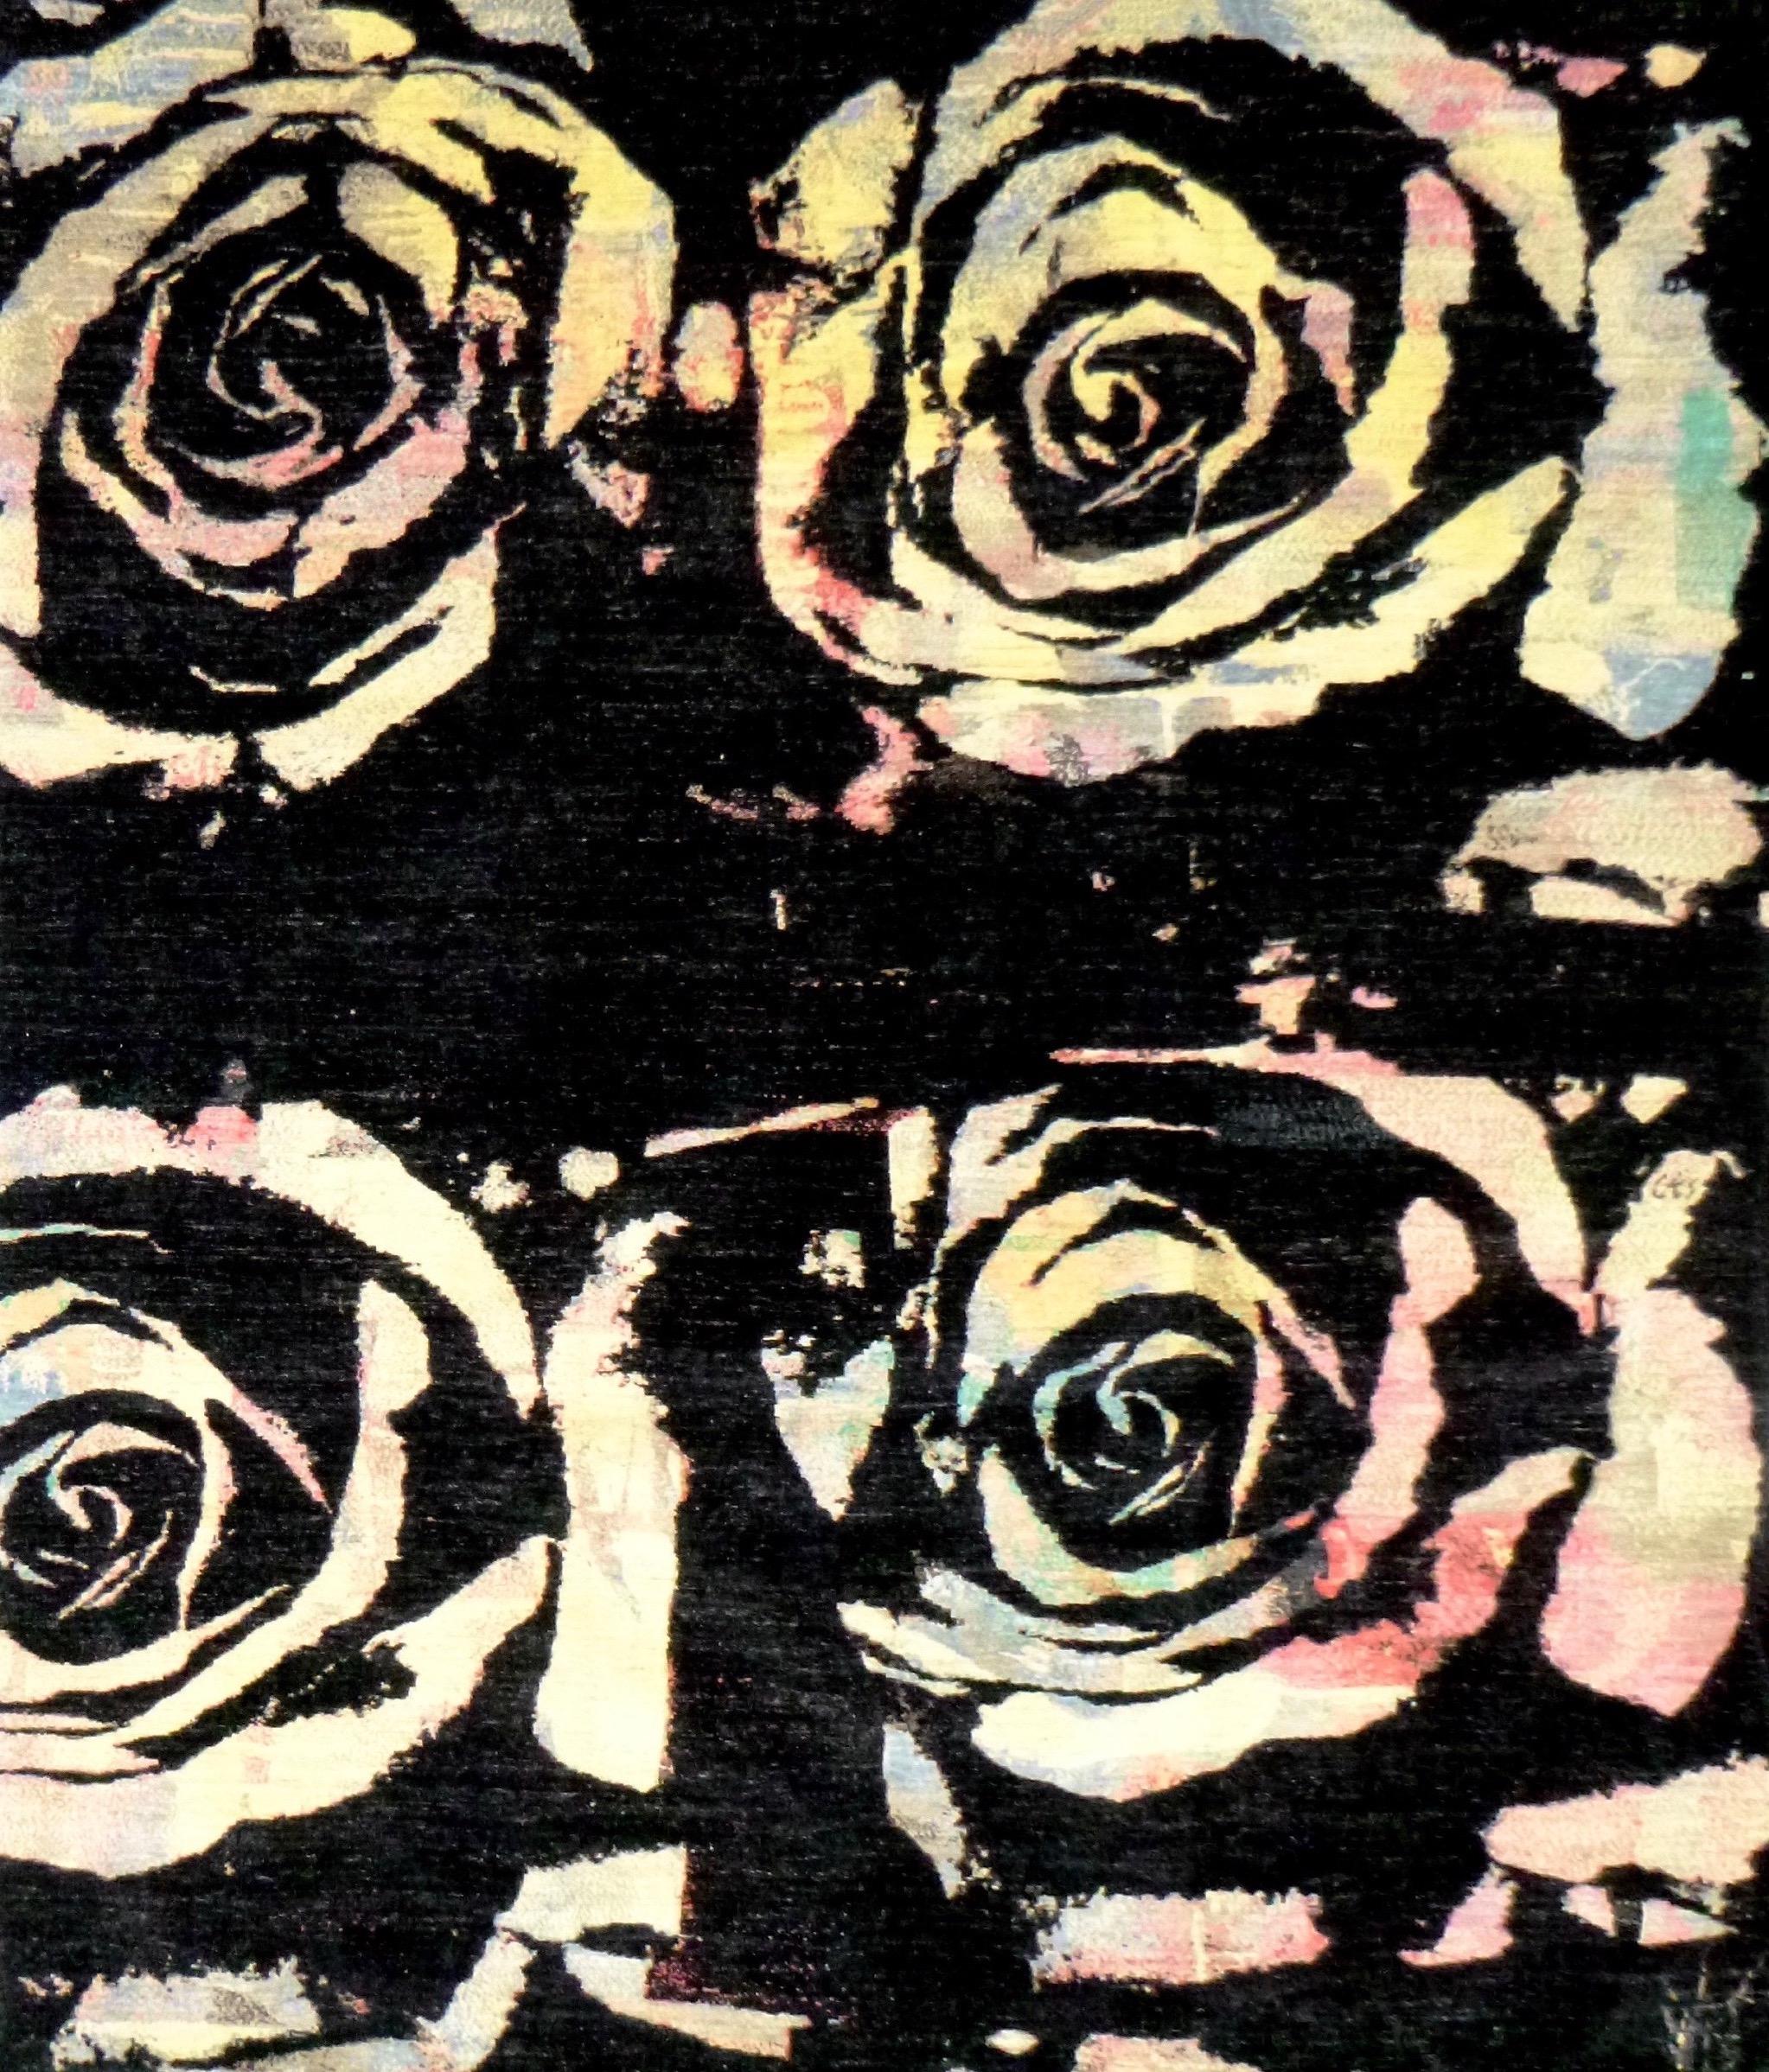 « Une rose est une rose, une rose est une rose » - création d'artistes dans un tissage - Photograph de Seek One